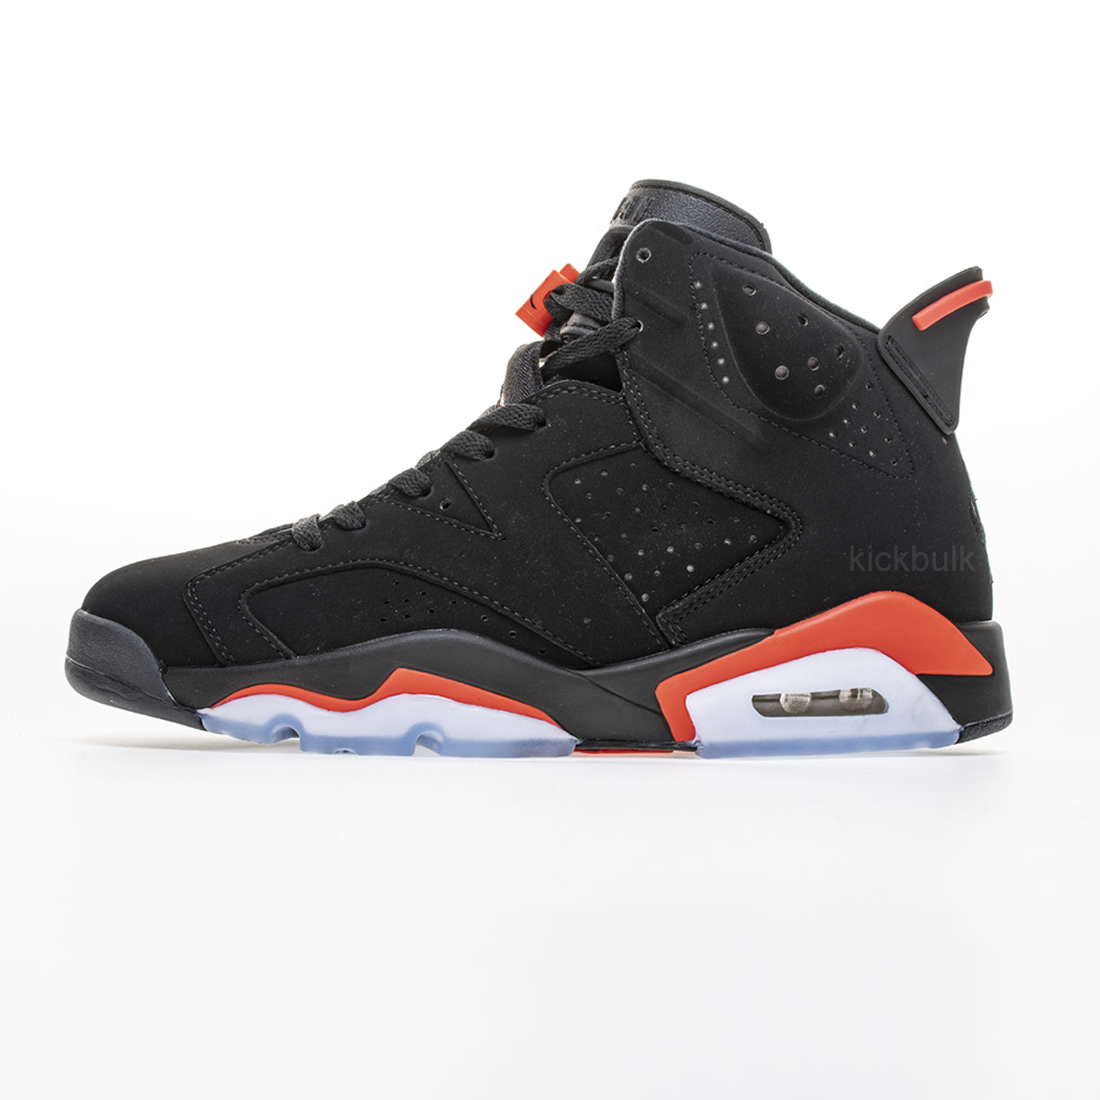 Nike Air Jordan 6 Black Infrared 384664 060 1 - www.kickbulk.cc